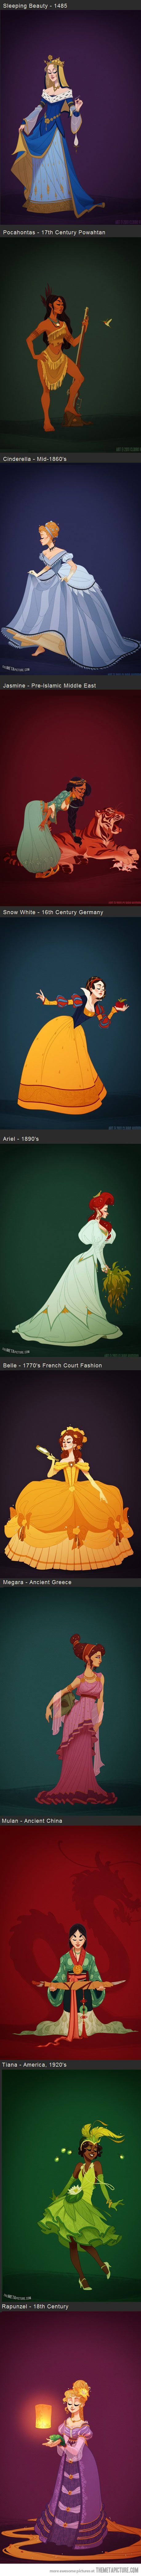 Disney Princesses in accurate period costume